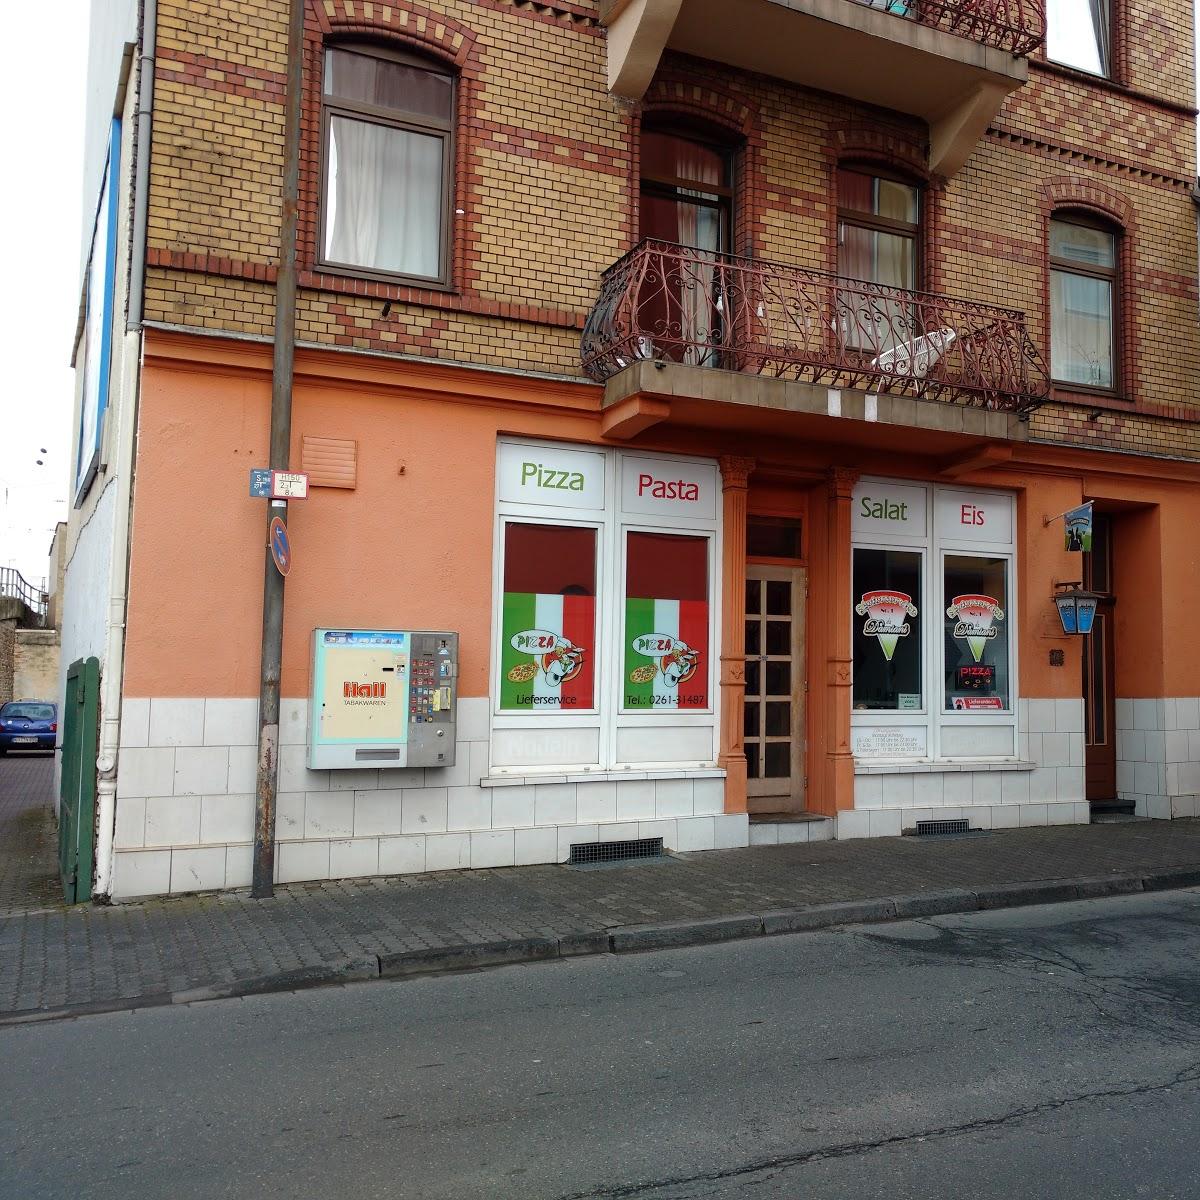 Restaurant "Da Damiani" in Koblenz